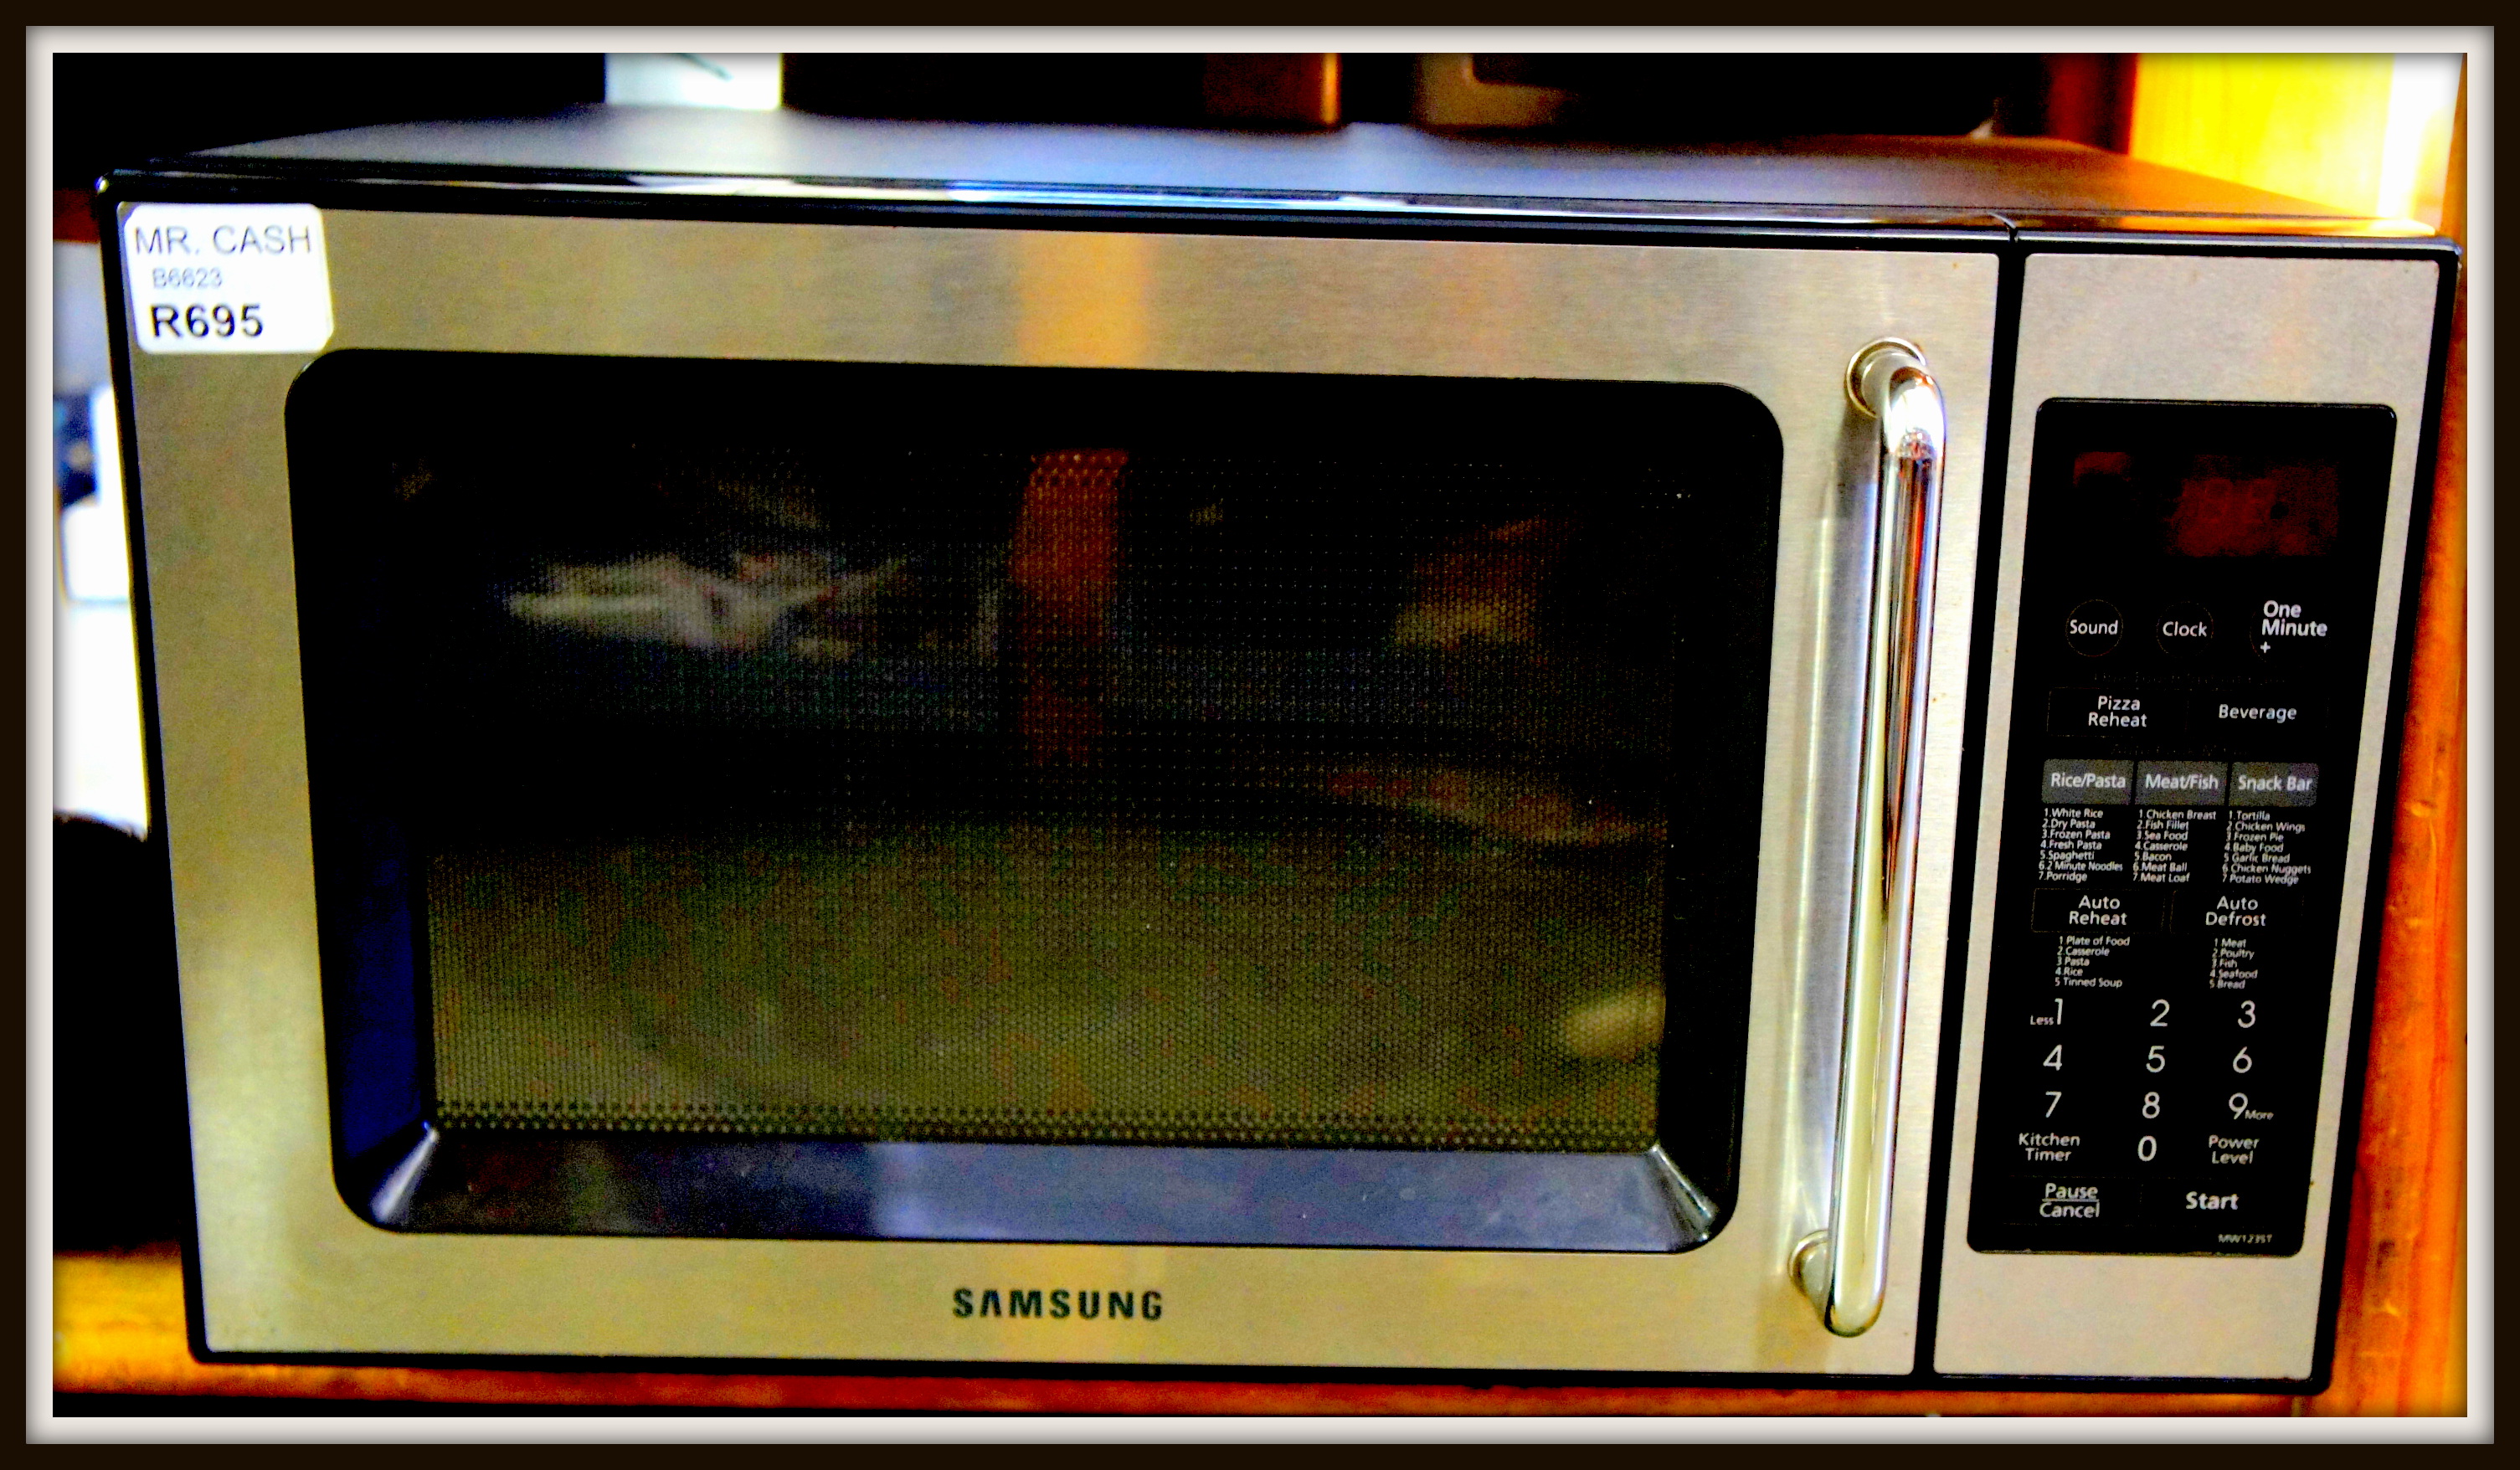 sam microwave B R695 - Copy